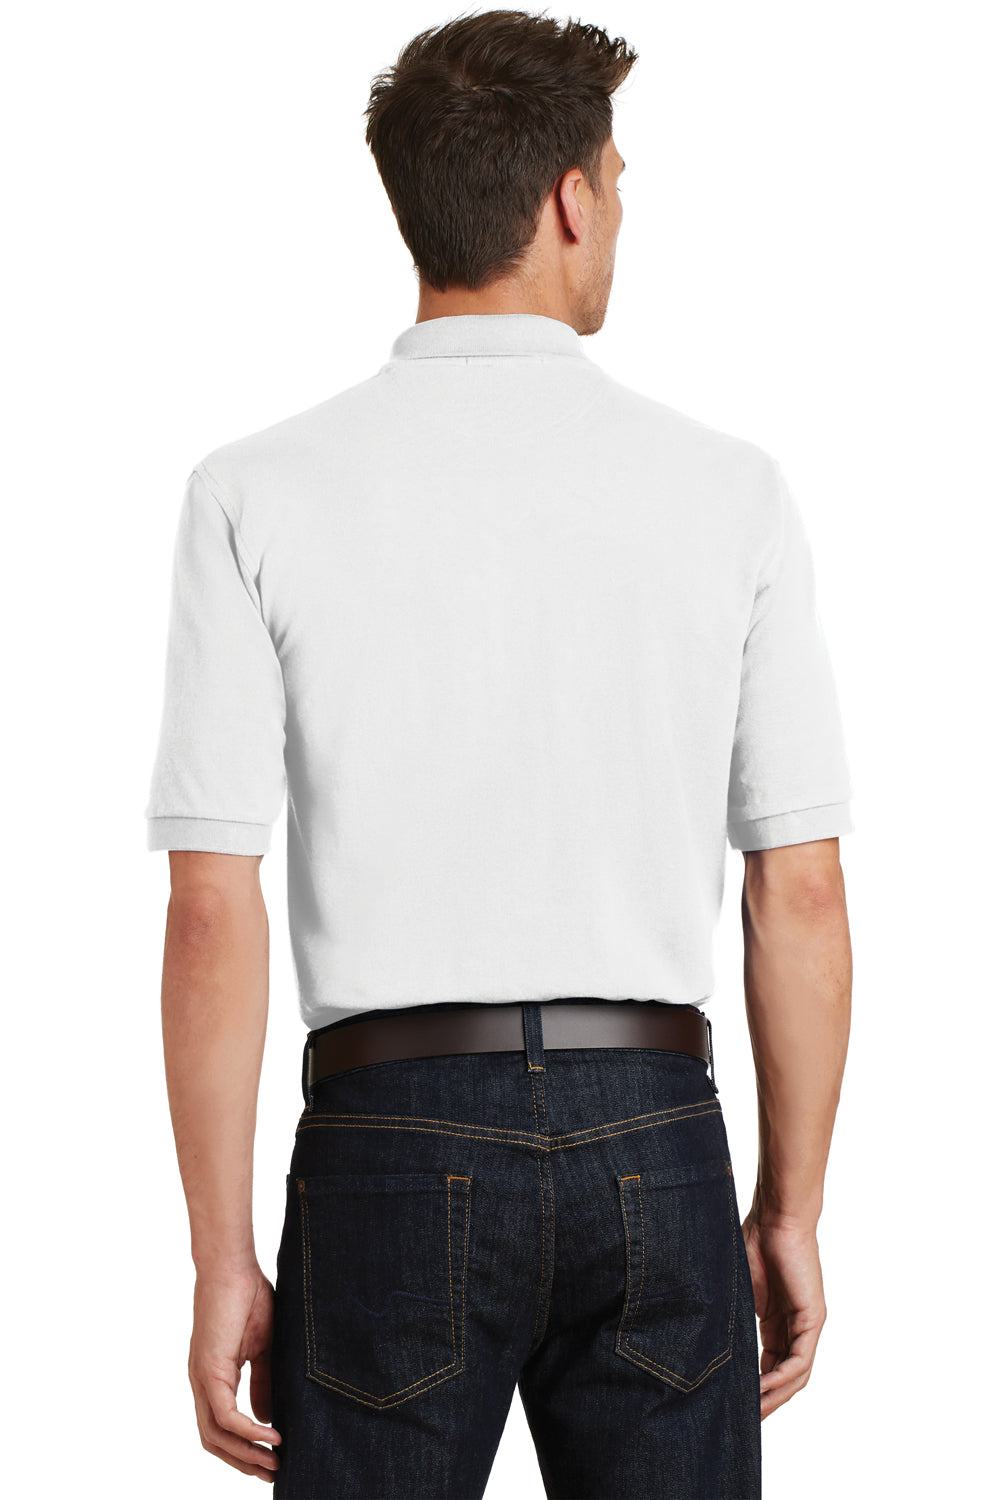 Port Authority K420P Mens Short Sleeve Polo Shirt w/ Pocket White Back